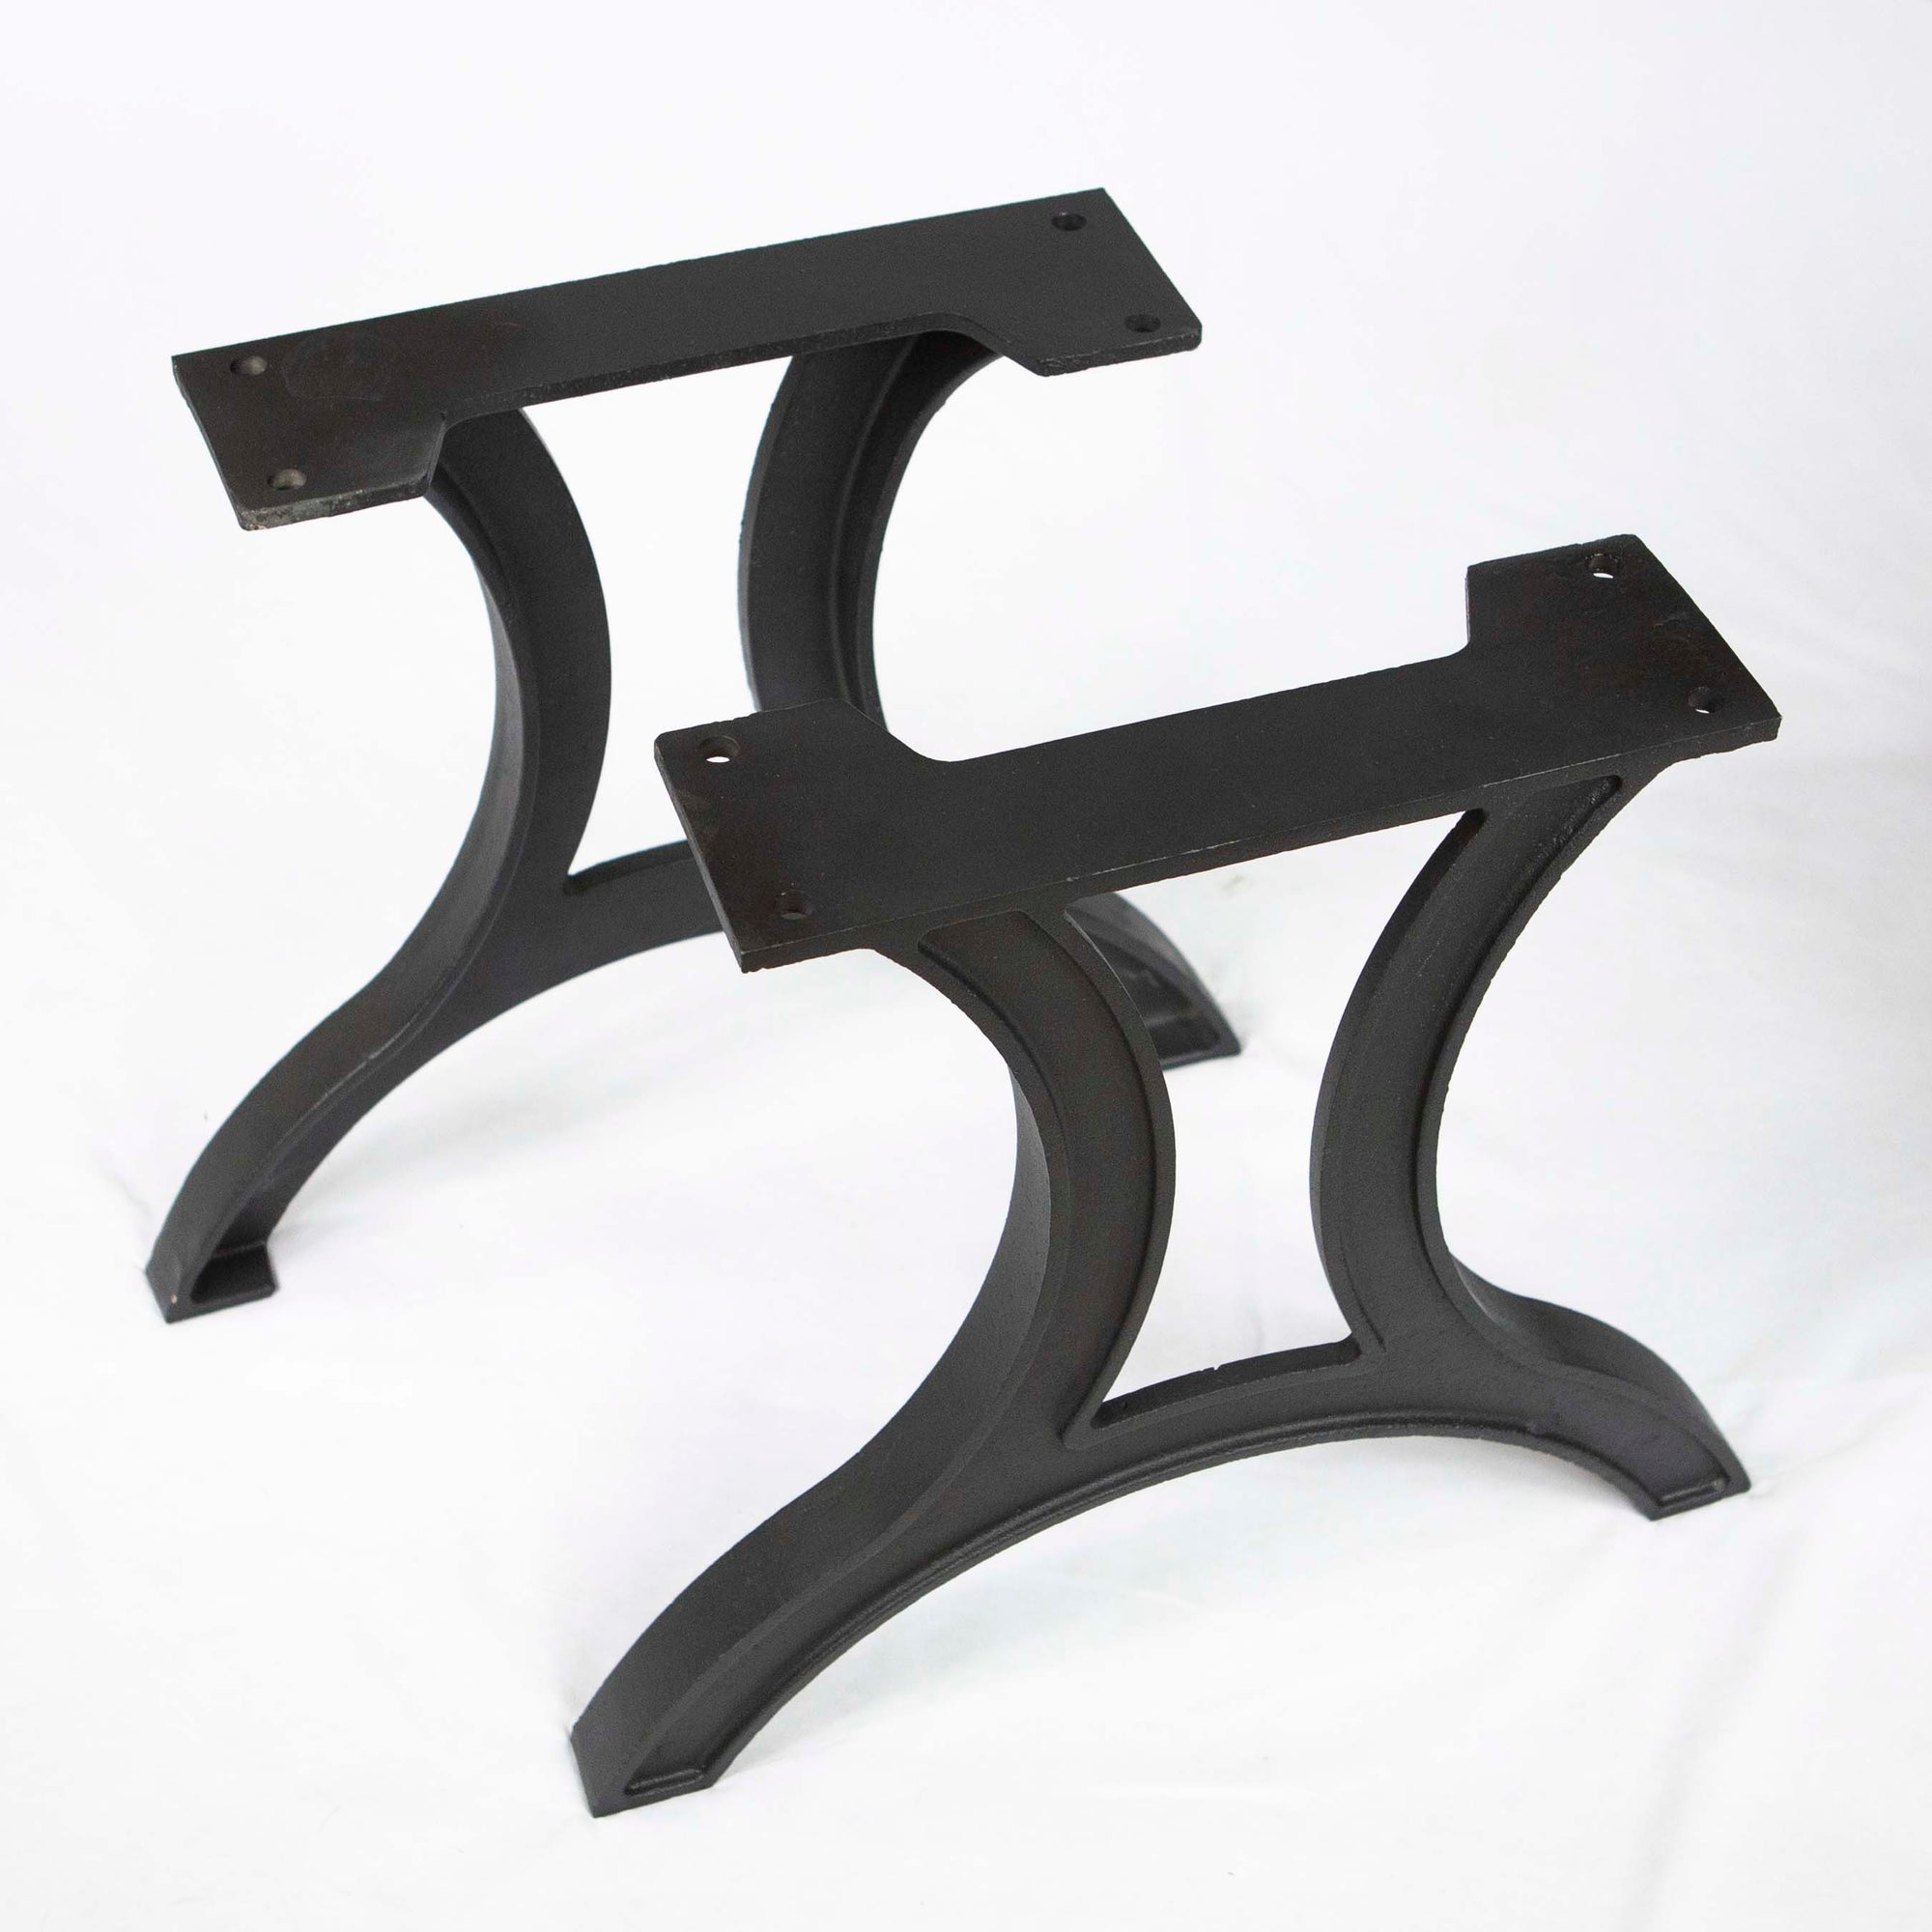 CN720 Cast Iron Coffee Table Legs, 1 Pair